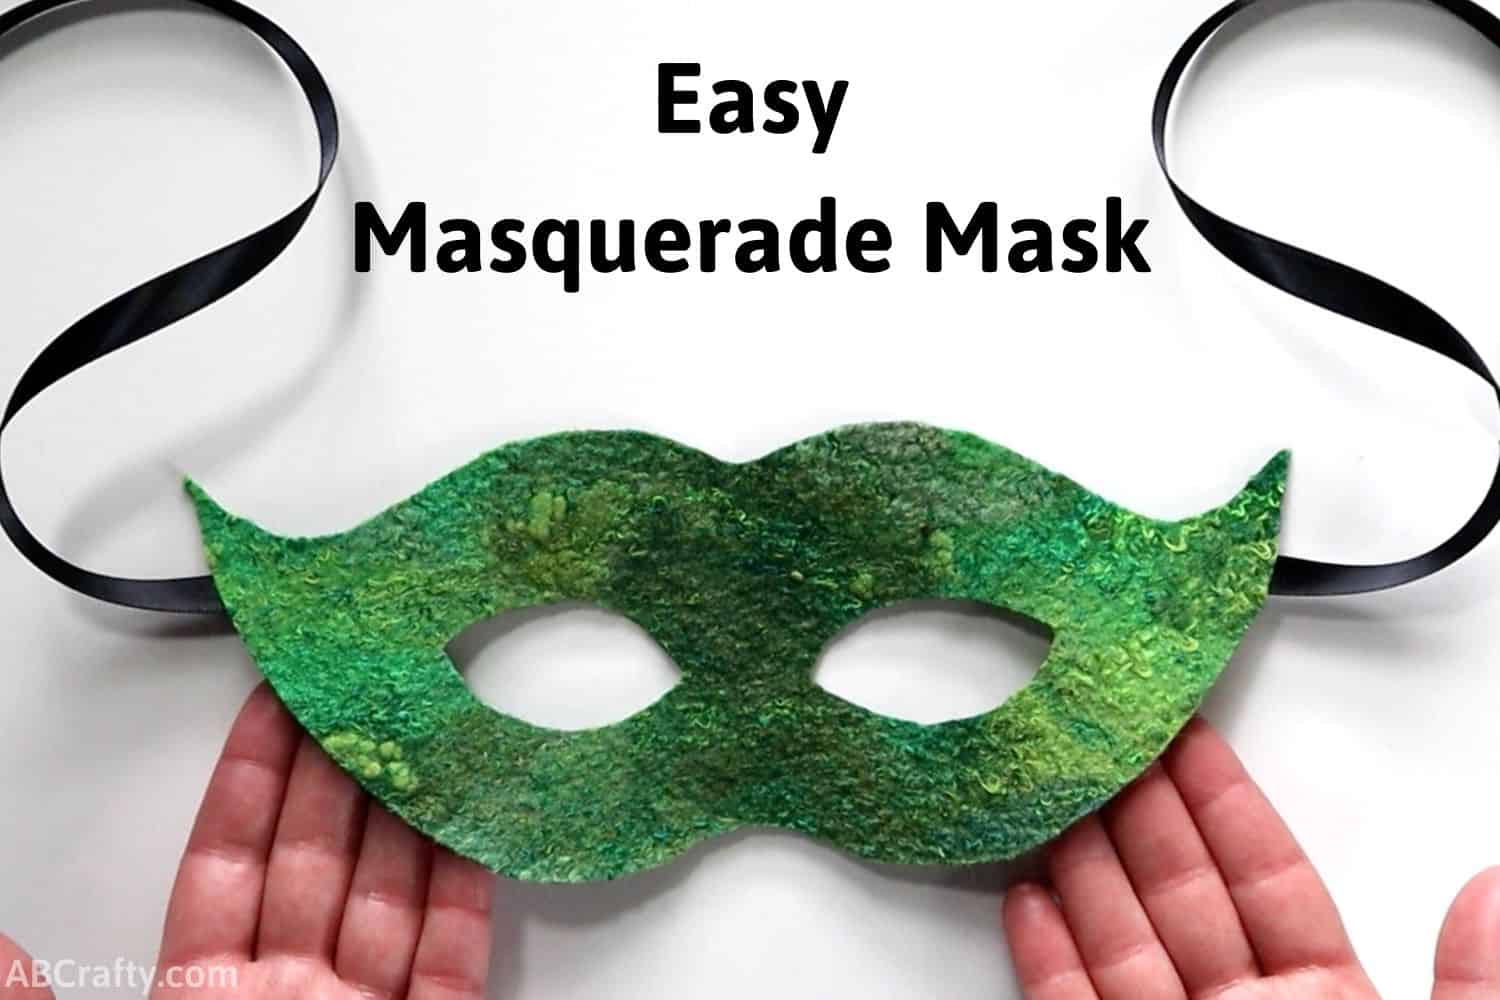 Easy Masquerade Mask - Make a Masquerade Mask with Felt - AB Crafty